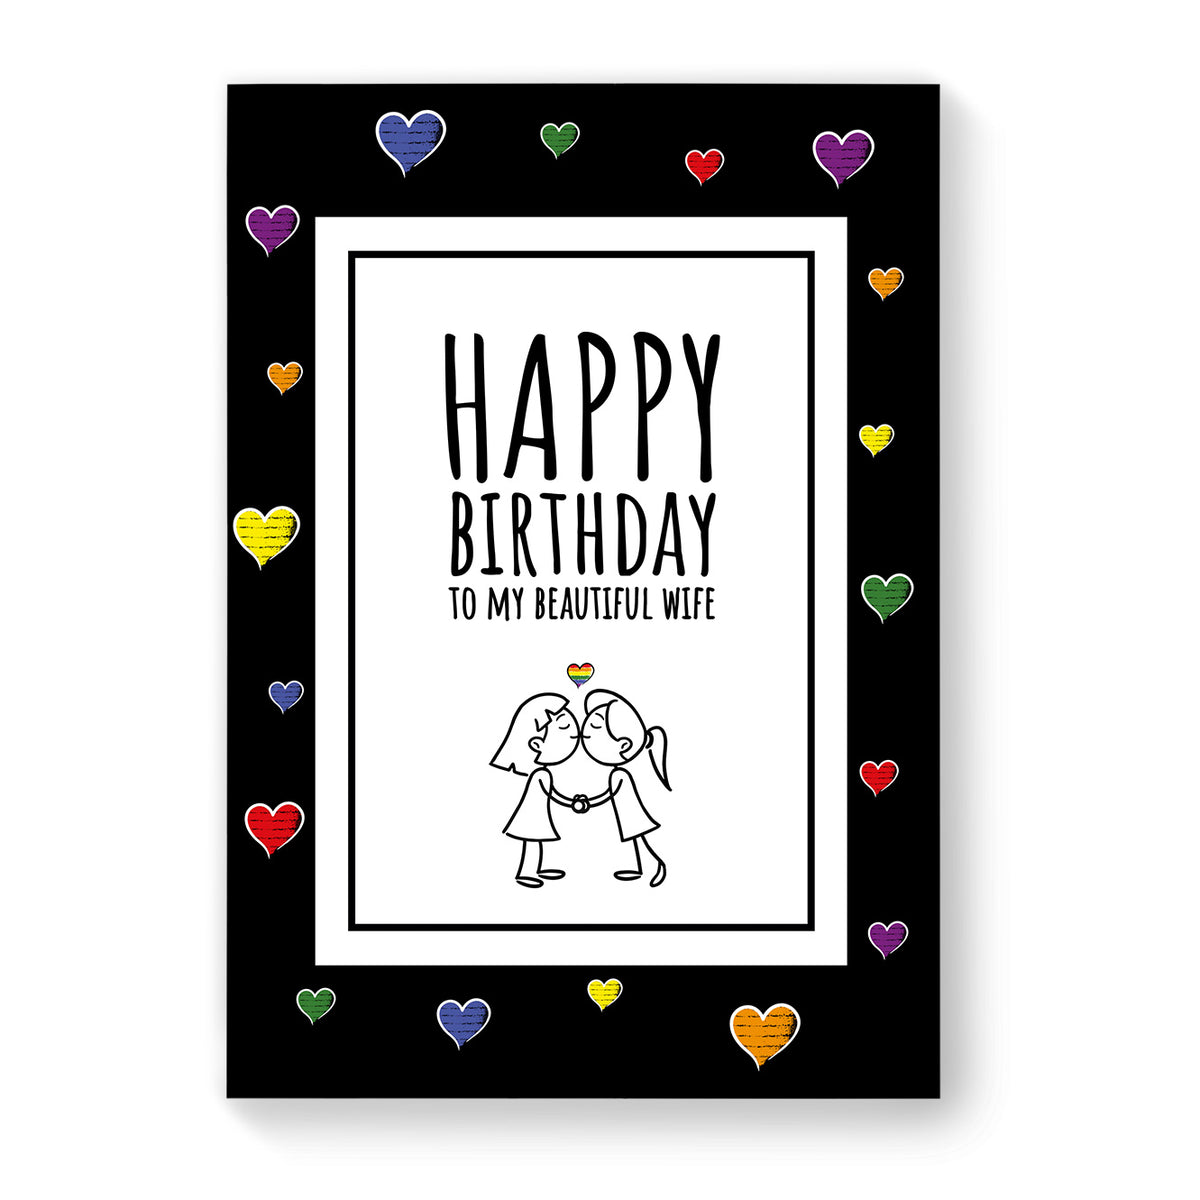 Happy Birthday to my beautiful wife - Lesbian Gay Birthday Card - Black Heart | Gift